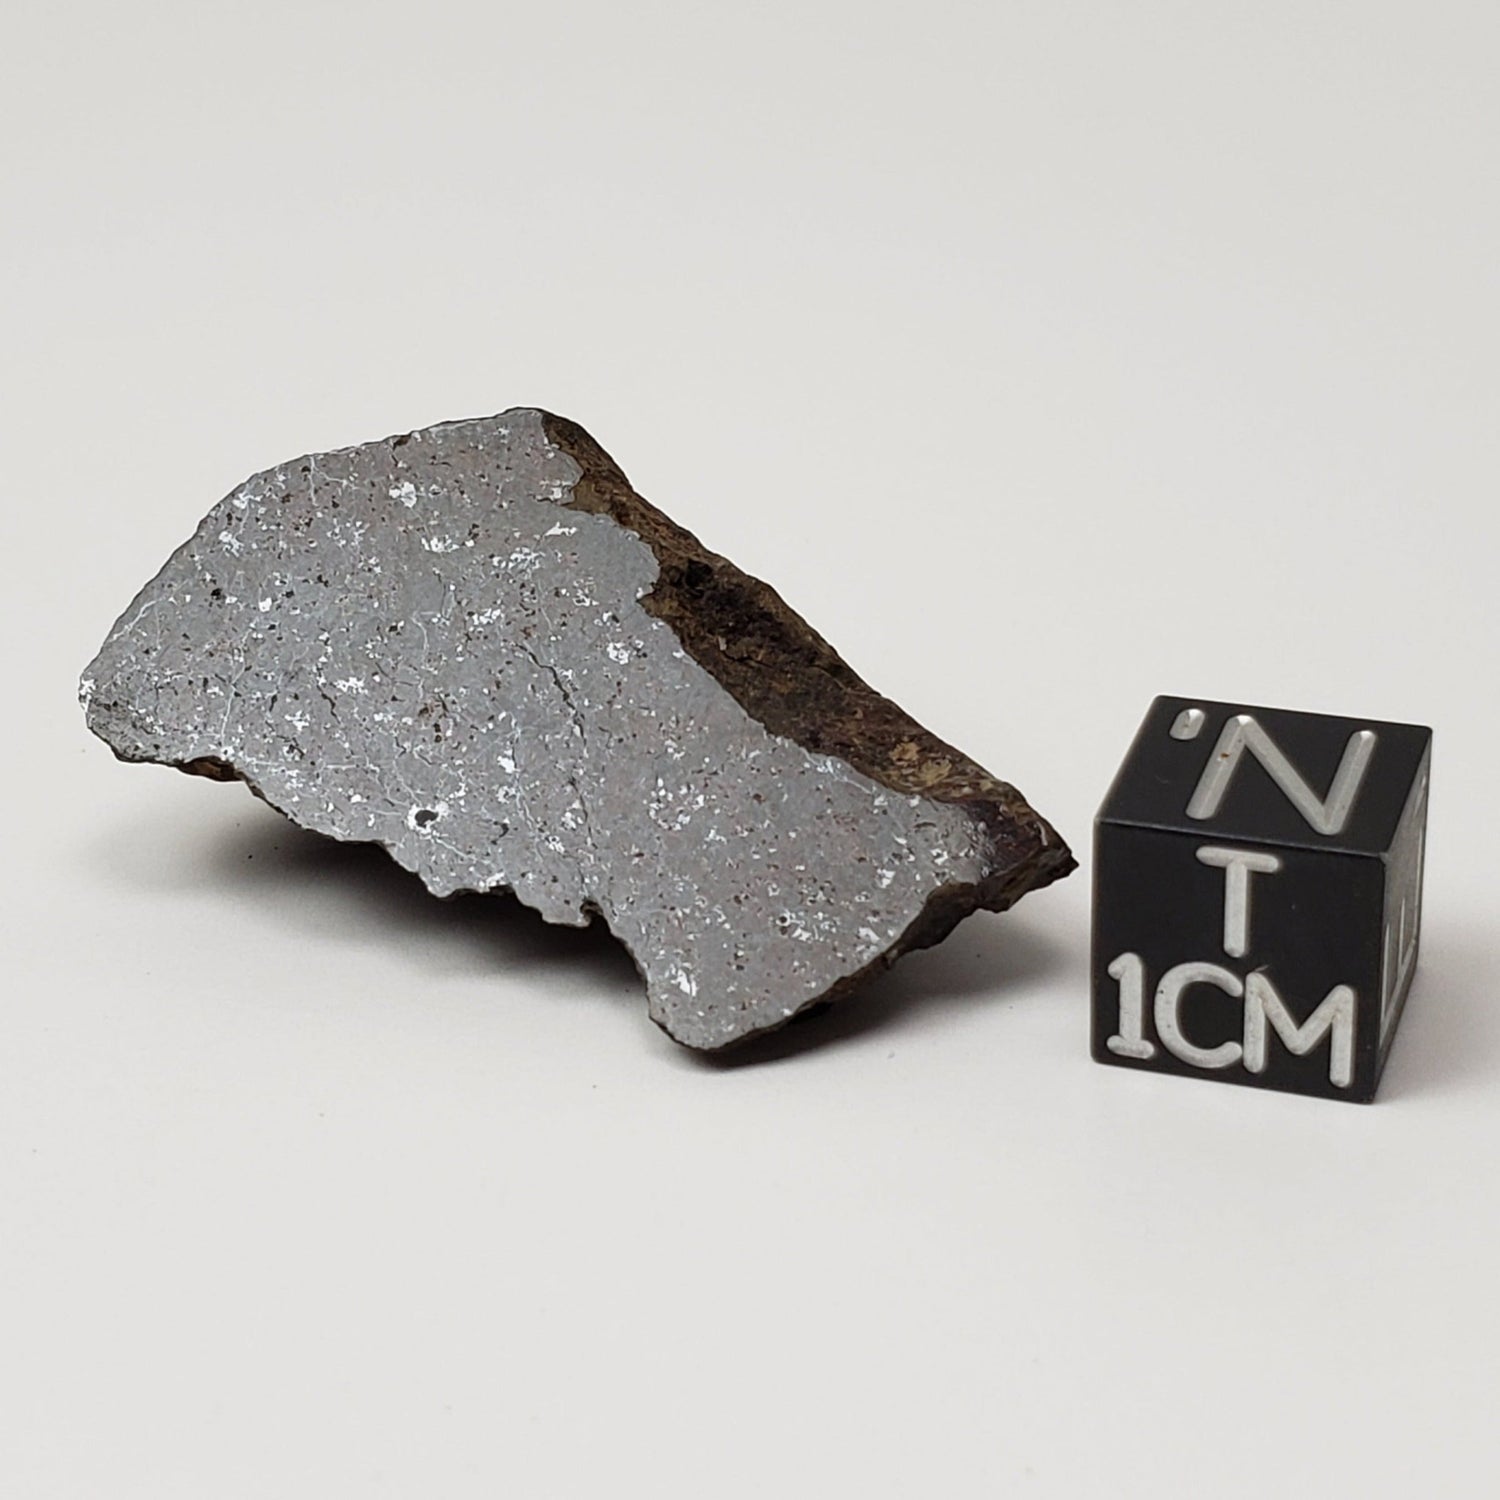 Shisr Shi 010 Meteorite | 11.49 Grams | End Cut | L5 Chondrite | Rare | Shisr Desert, Oman